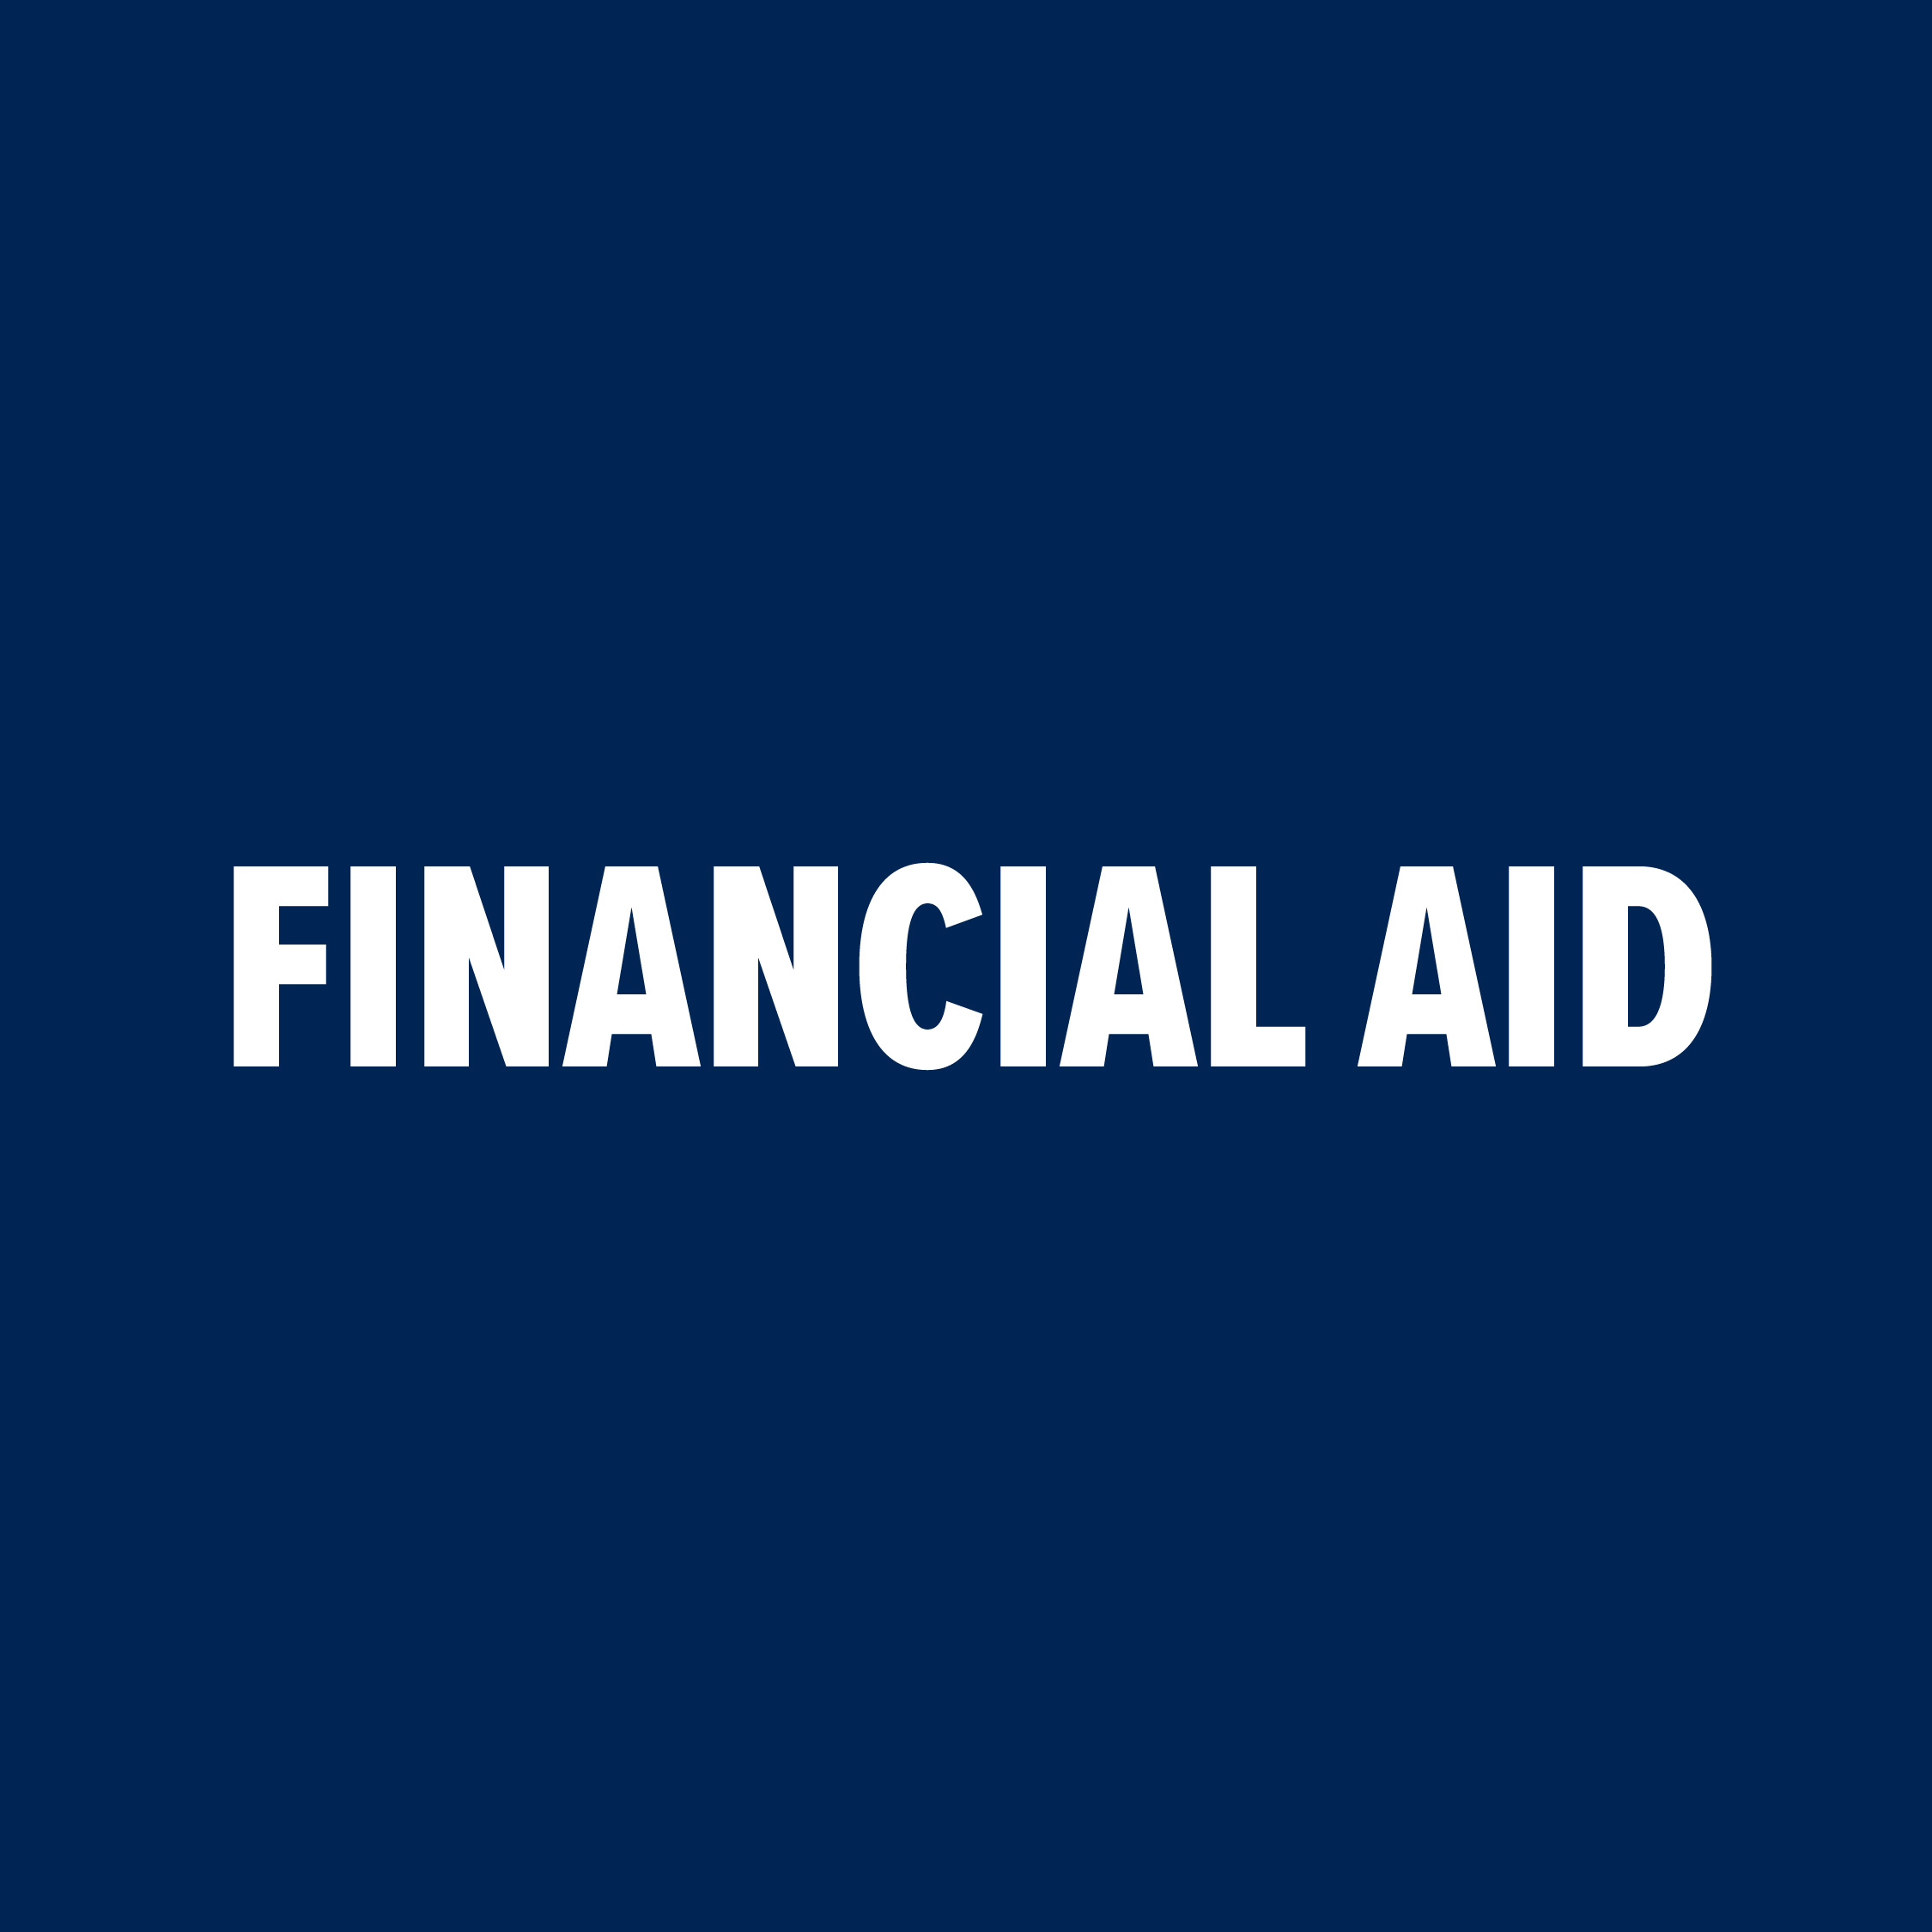 Financial Aid Tile